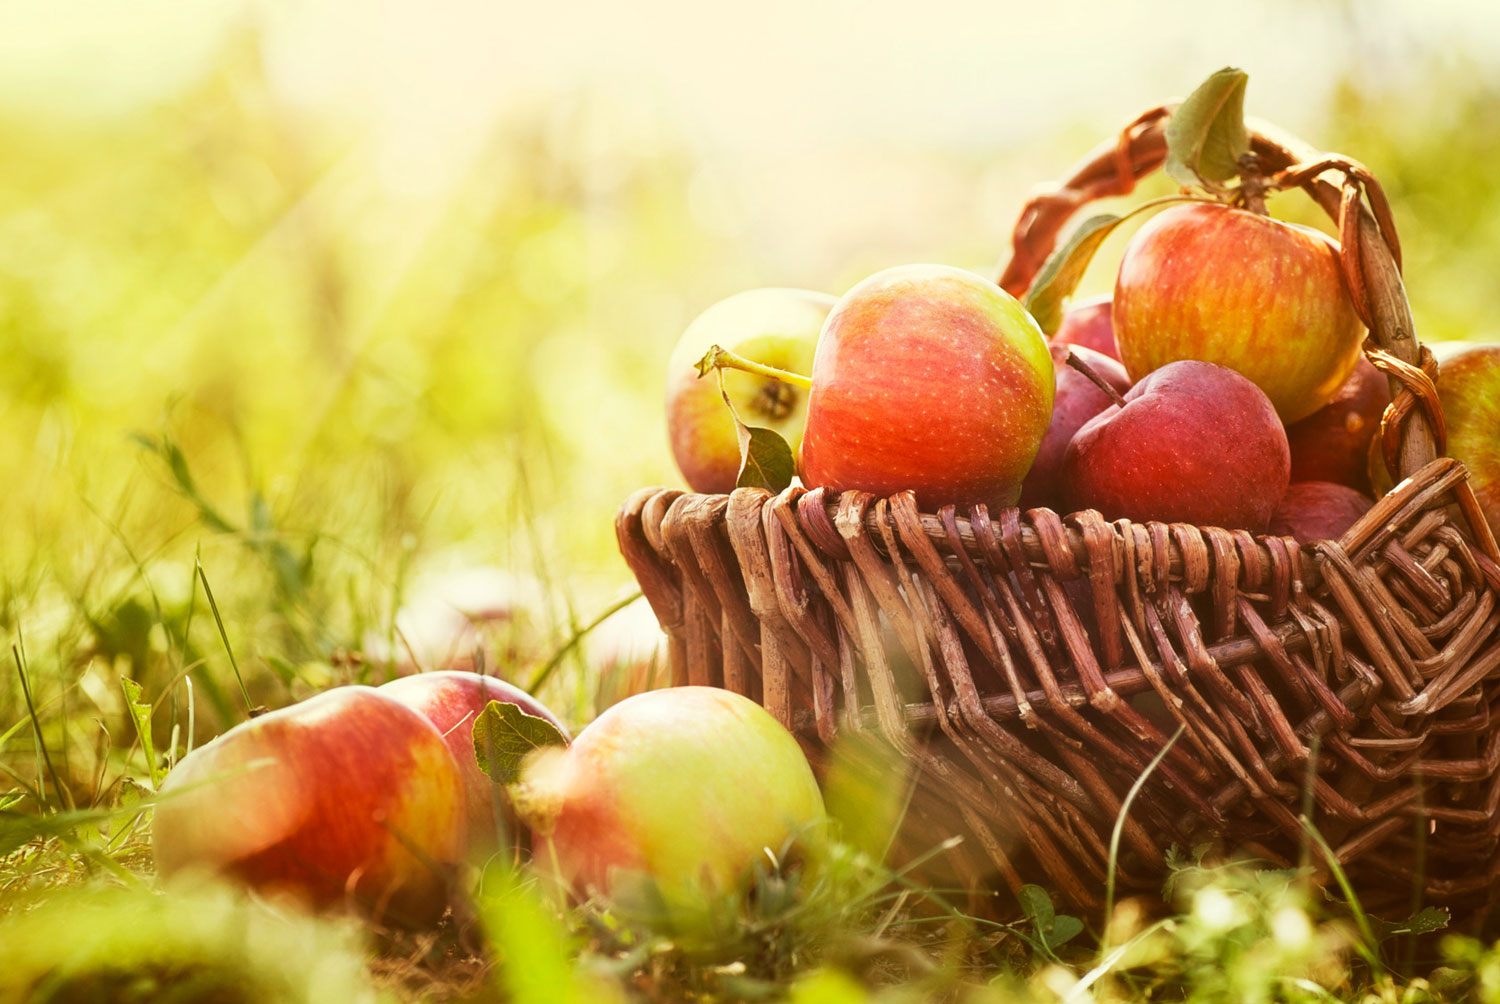 Chelan Fresh Apples, Organic, Gala